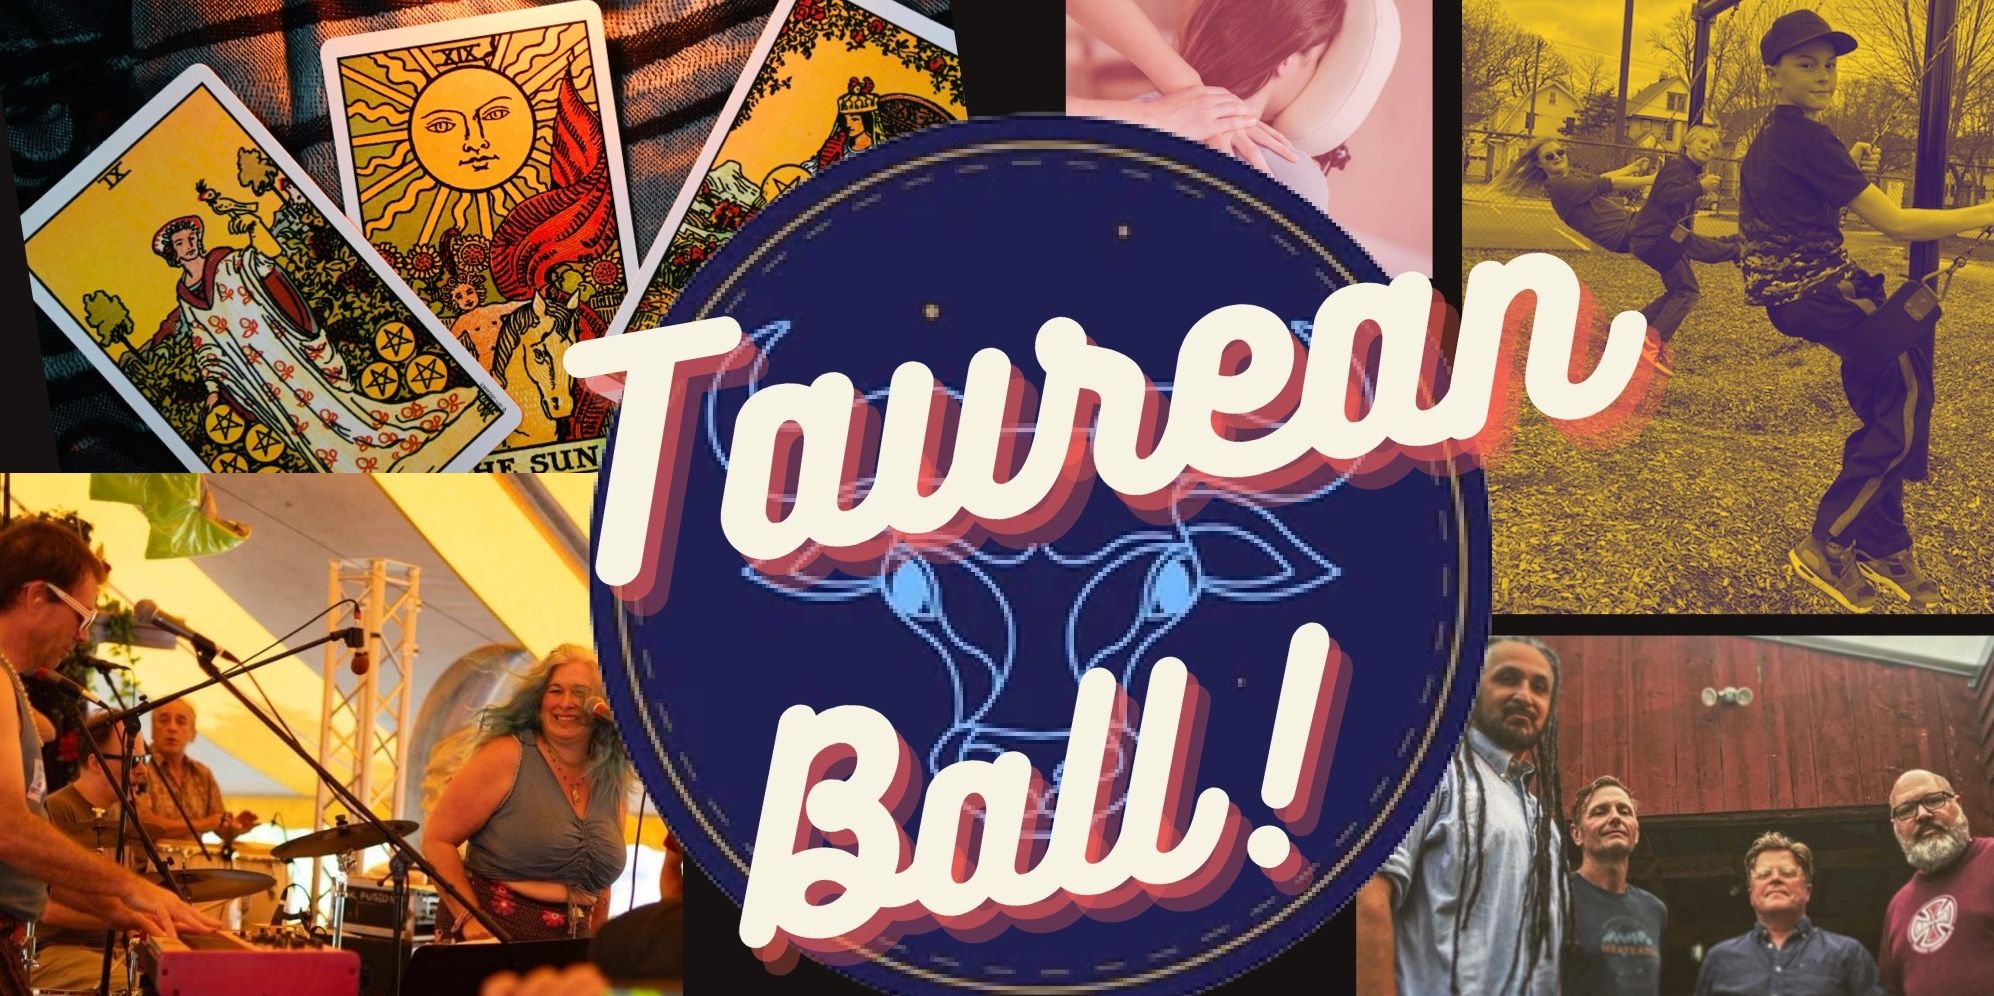 Taurean Ball - Live Music, Dance, Healing Room promotional image